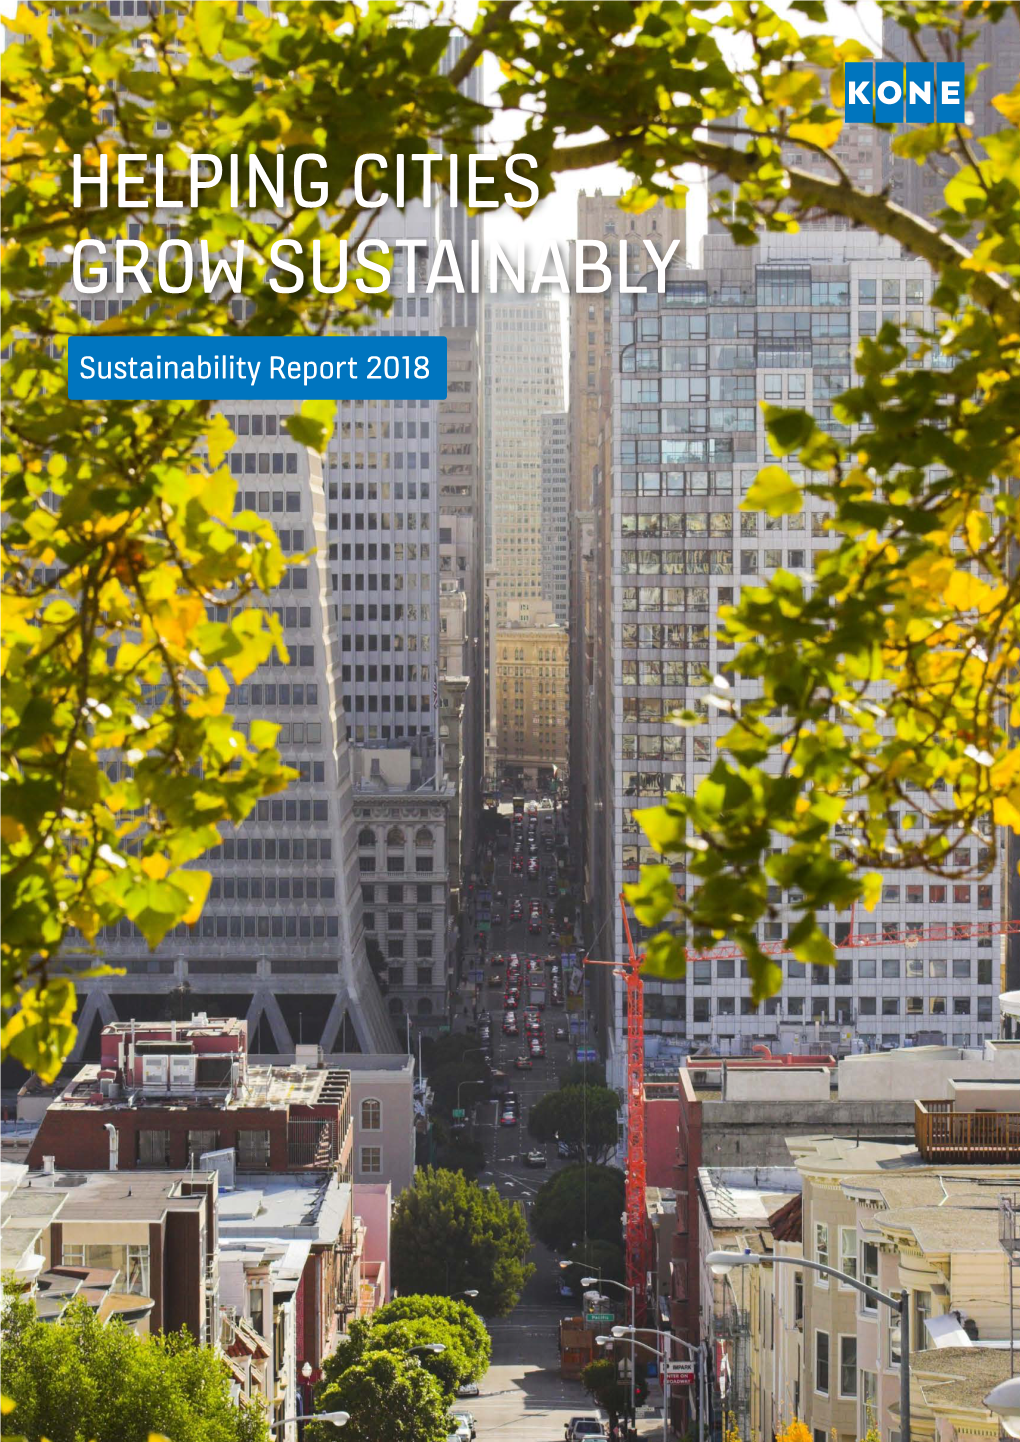 KONE's Sustainability Report 2018 (PDF)